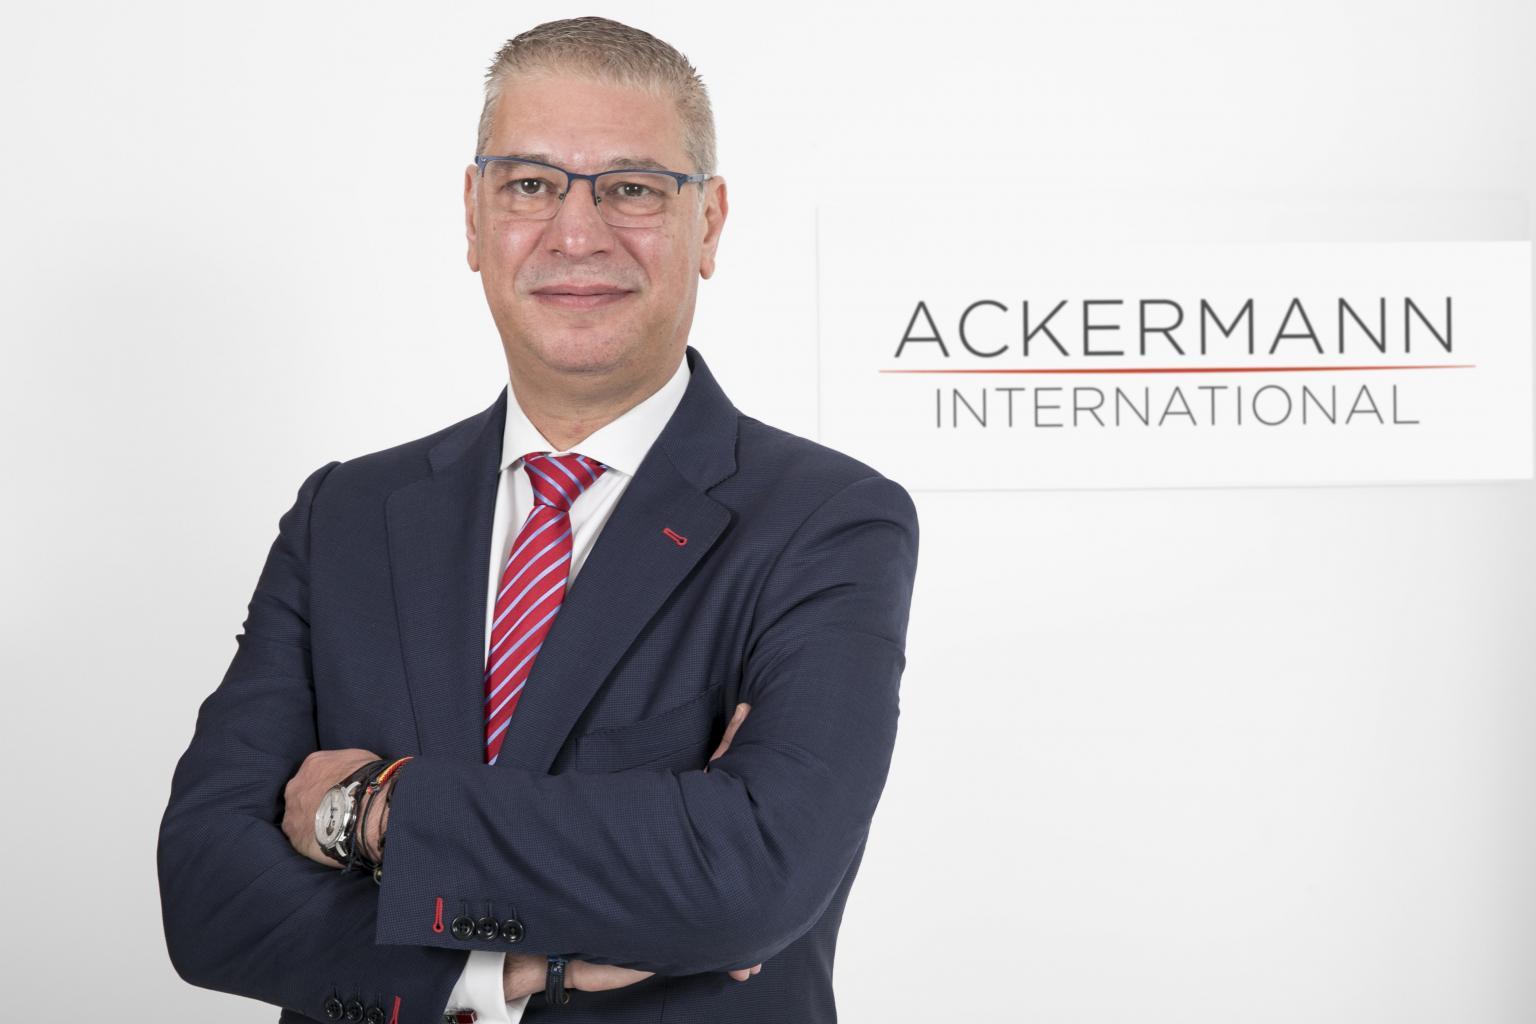 Samuel Pimentel, Executive Chairman Ackermann International